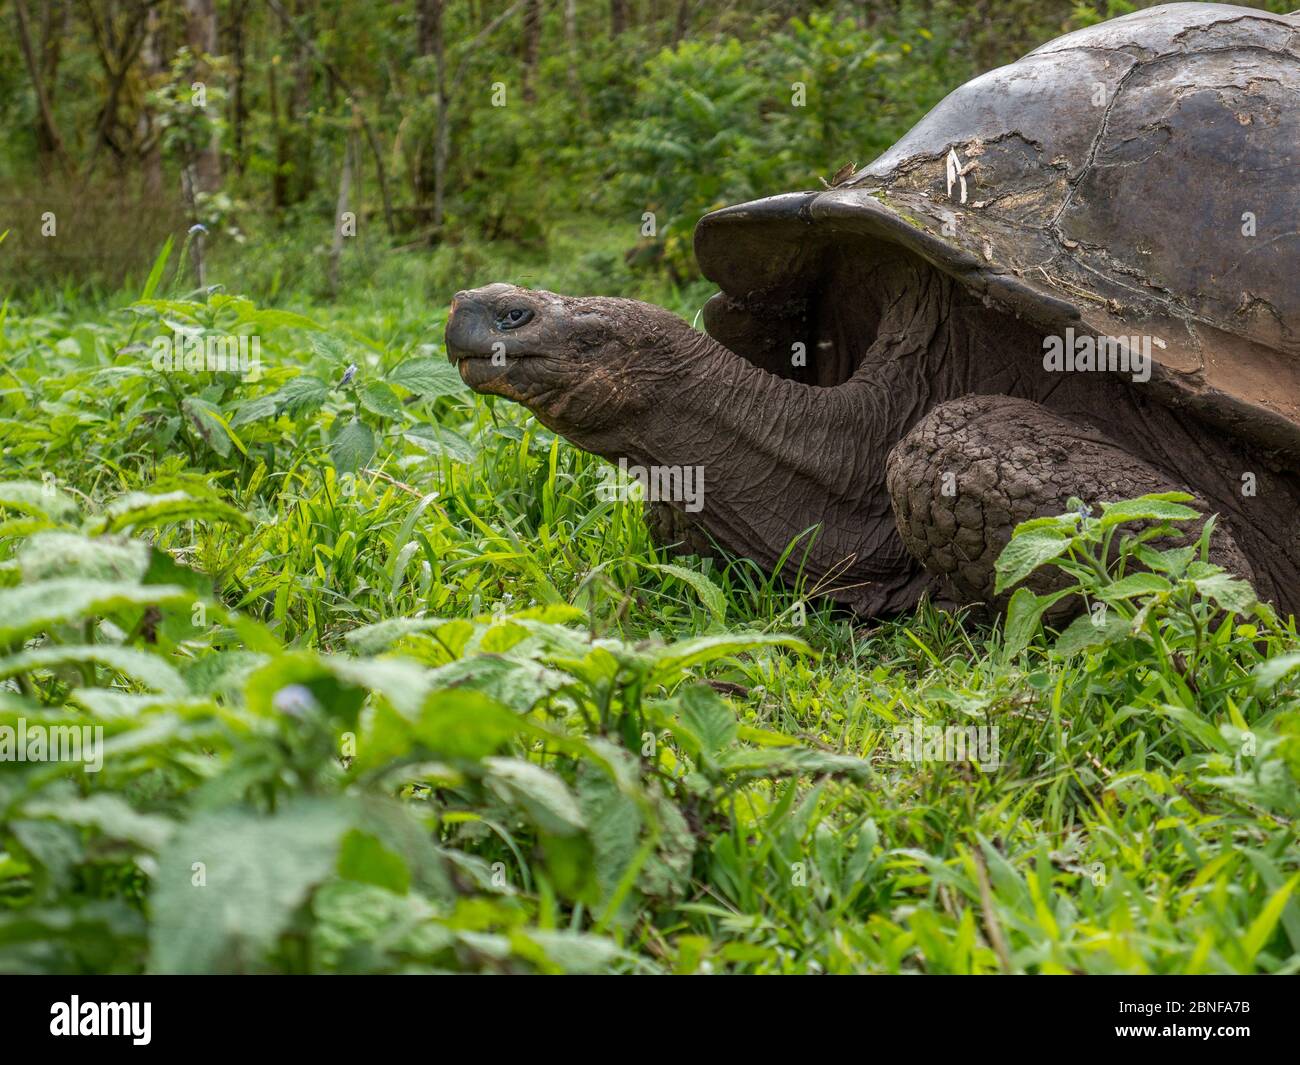 A wild galapagose tortoise feeding on a meadow. Stock Photo